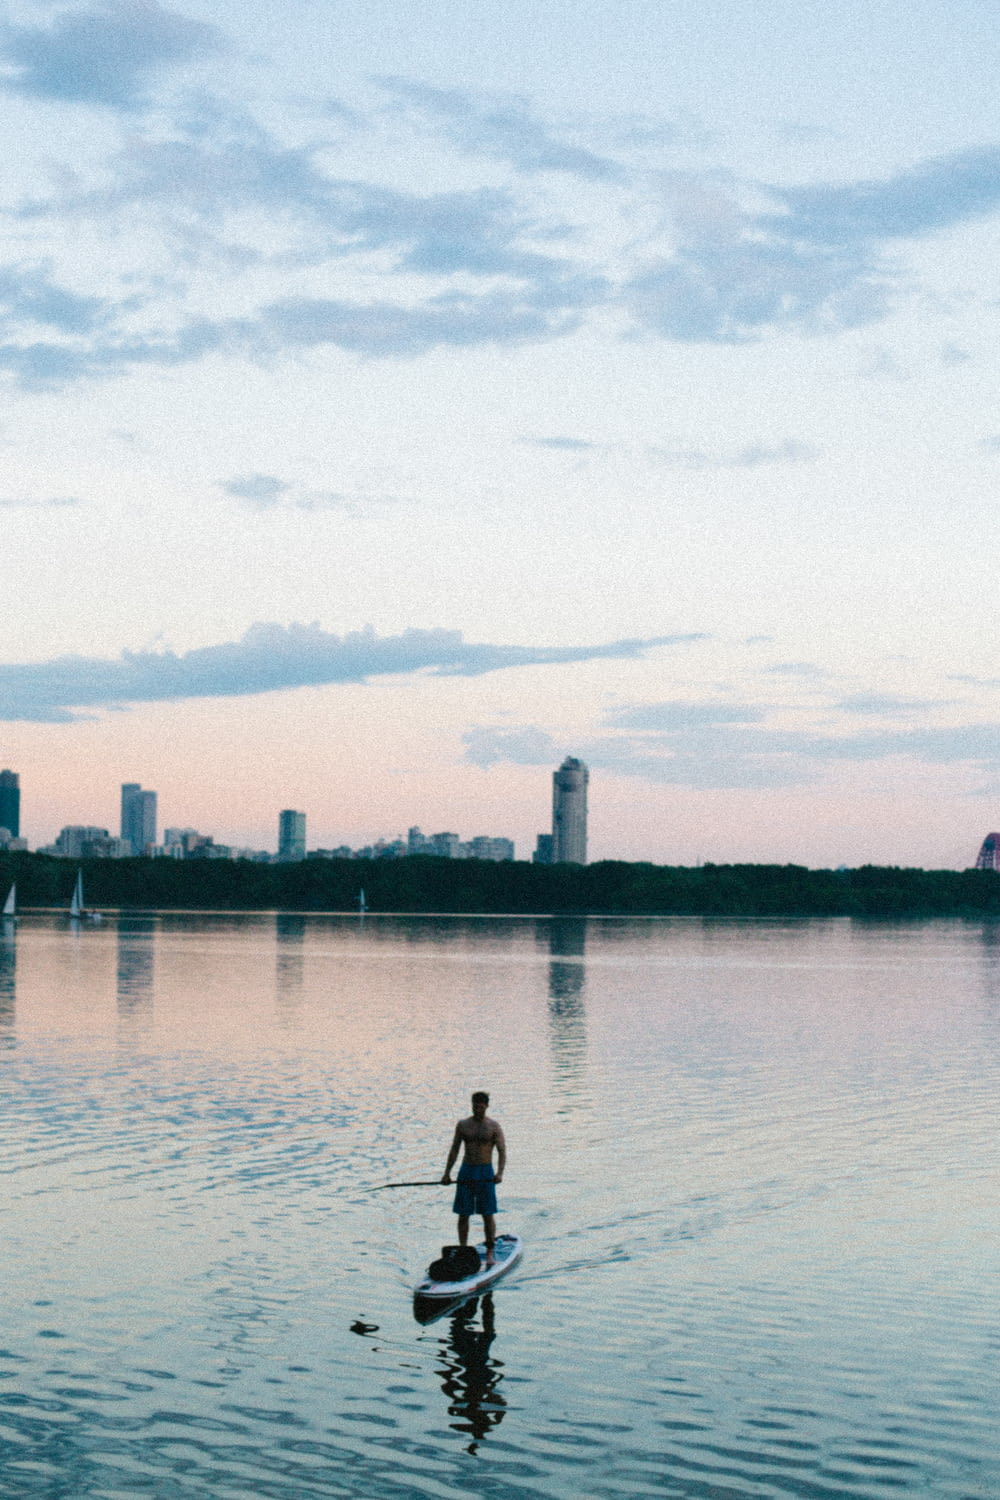 a man paddle boarding on a lake